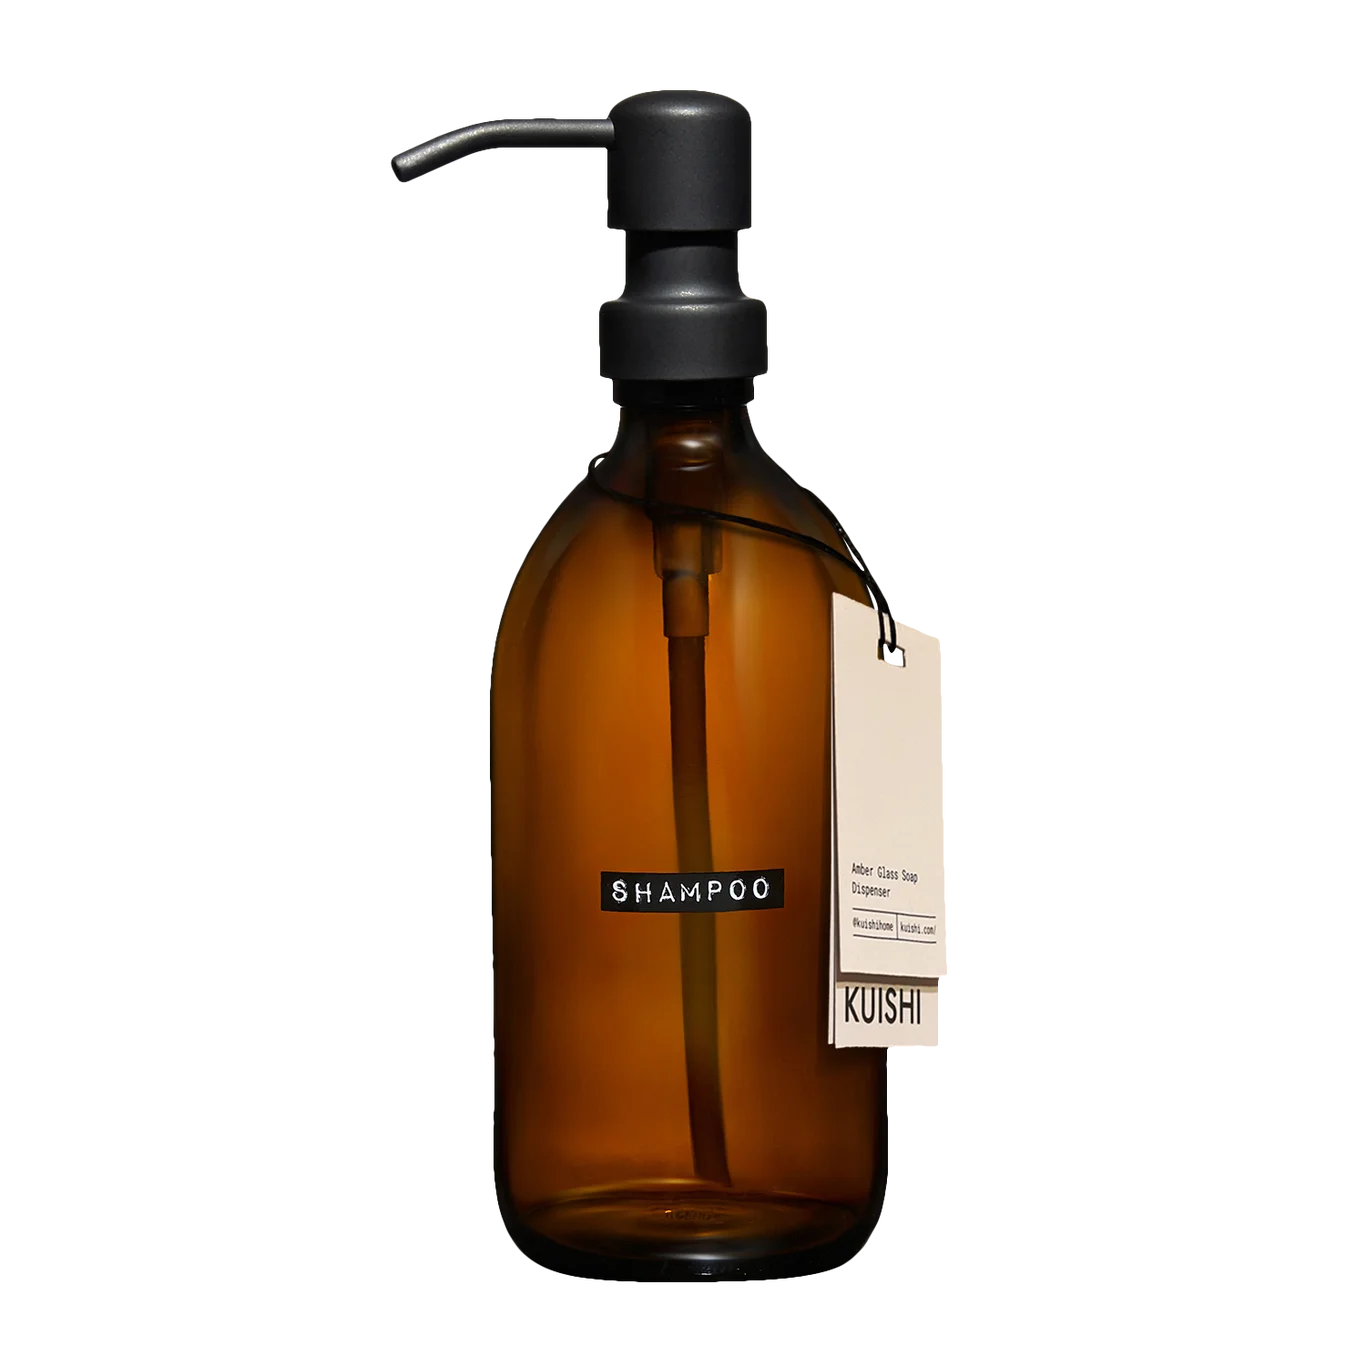 Permanent Printed Shampoo Label Dispenser Bottles 500ml Black Pump